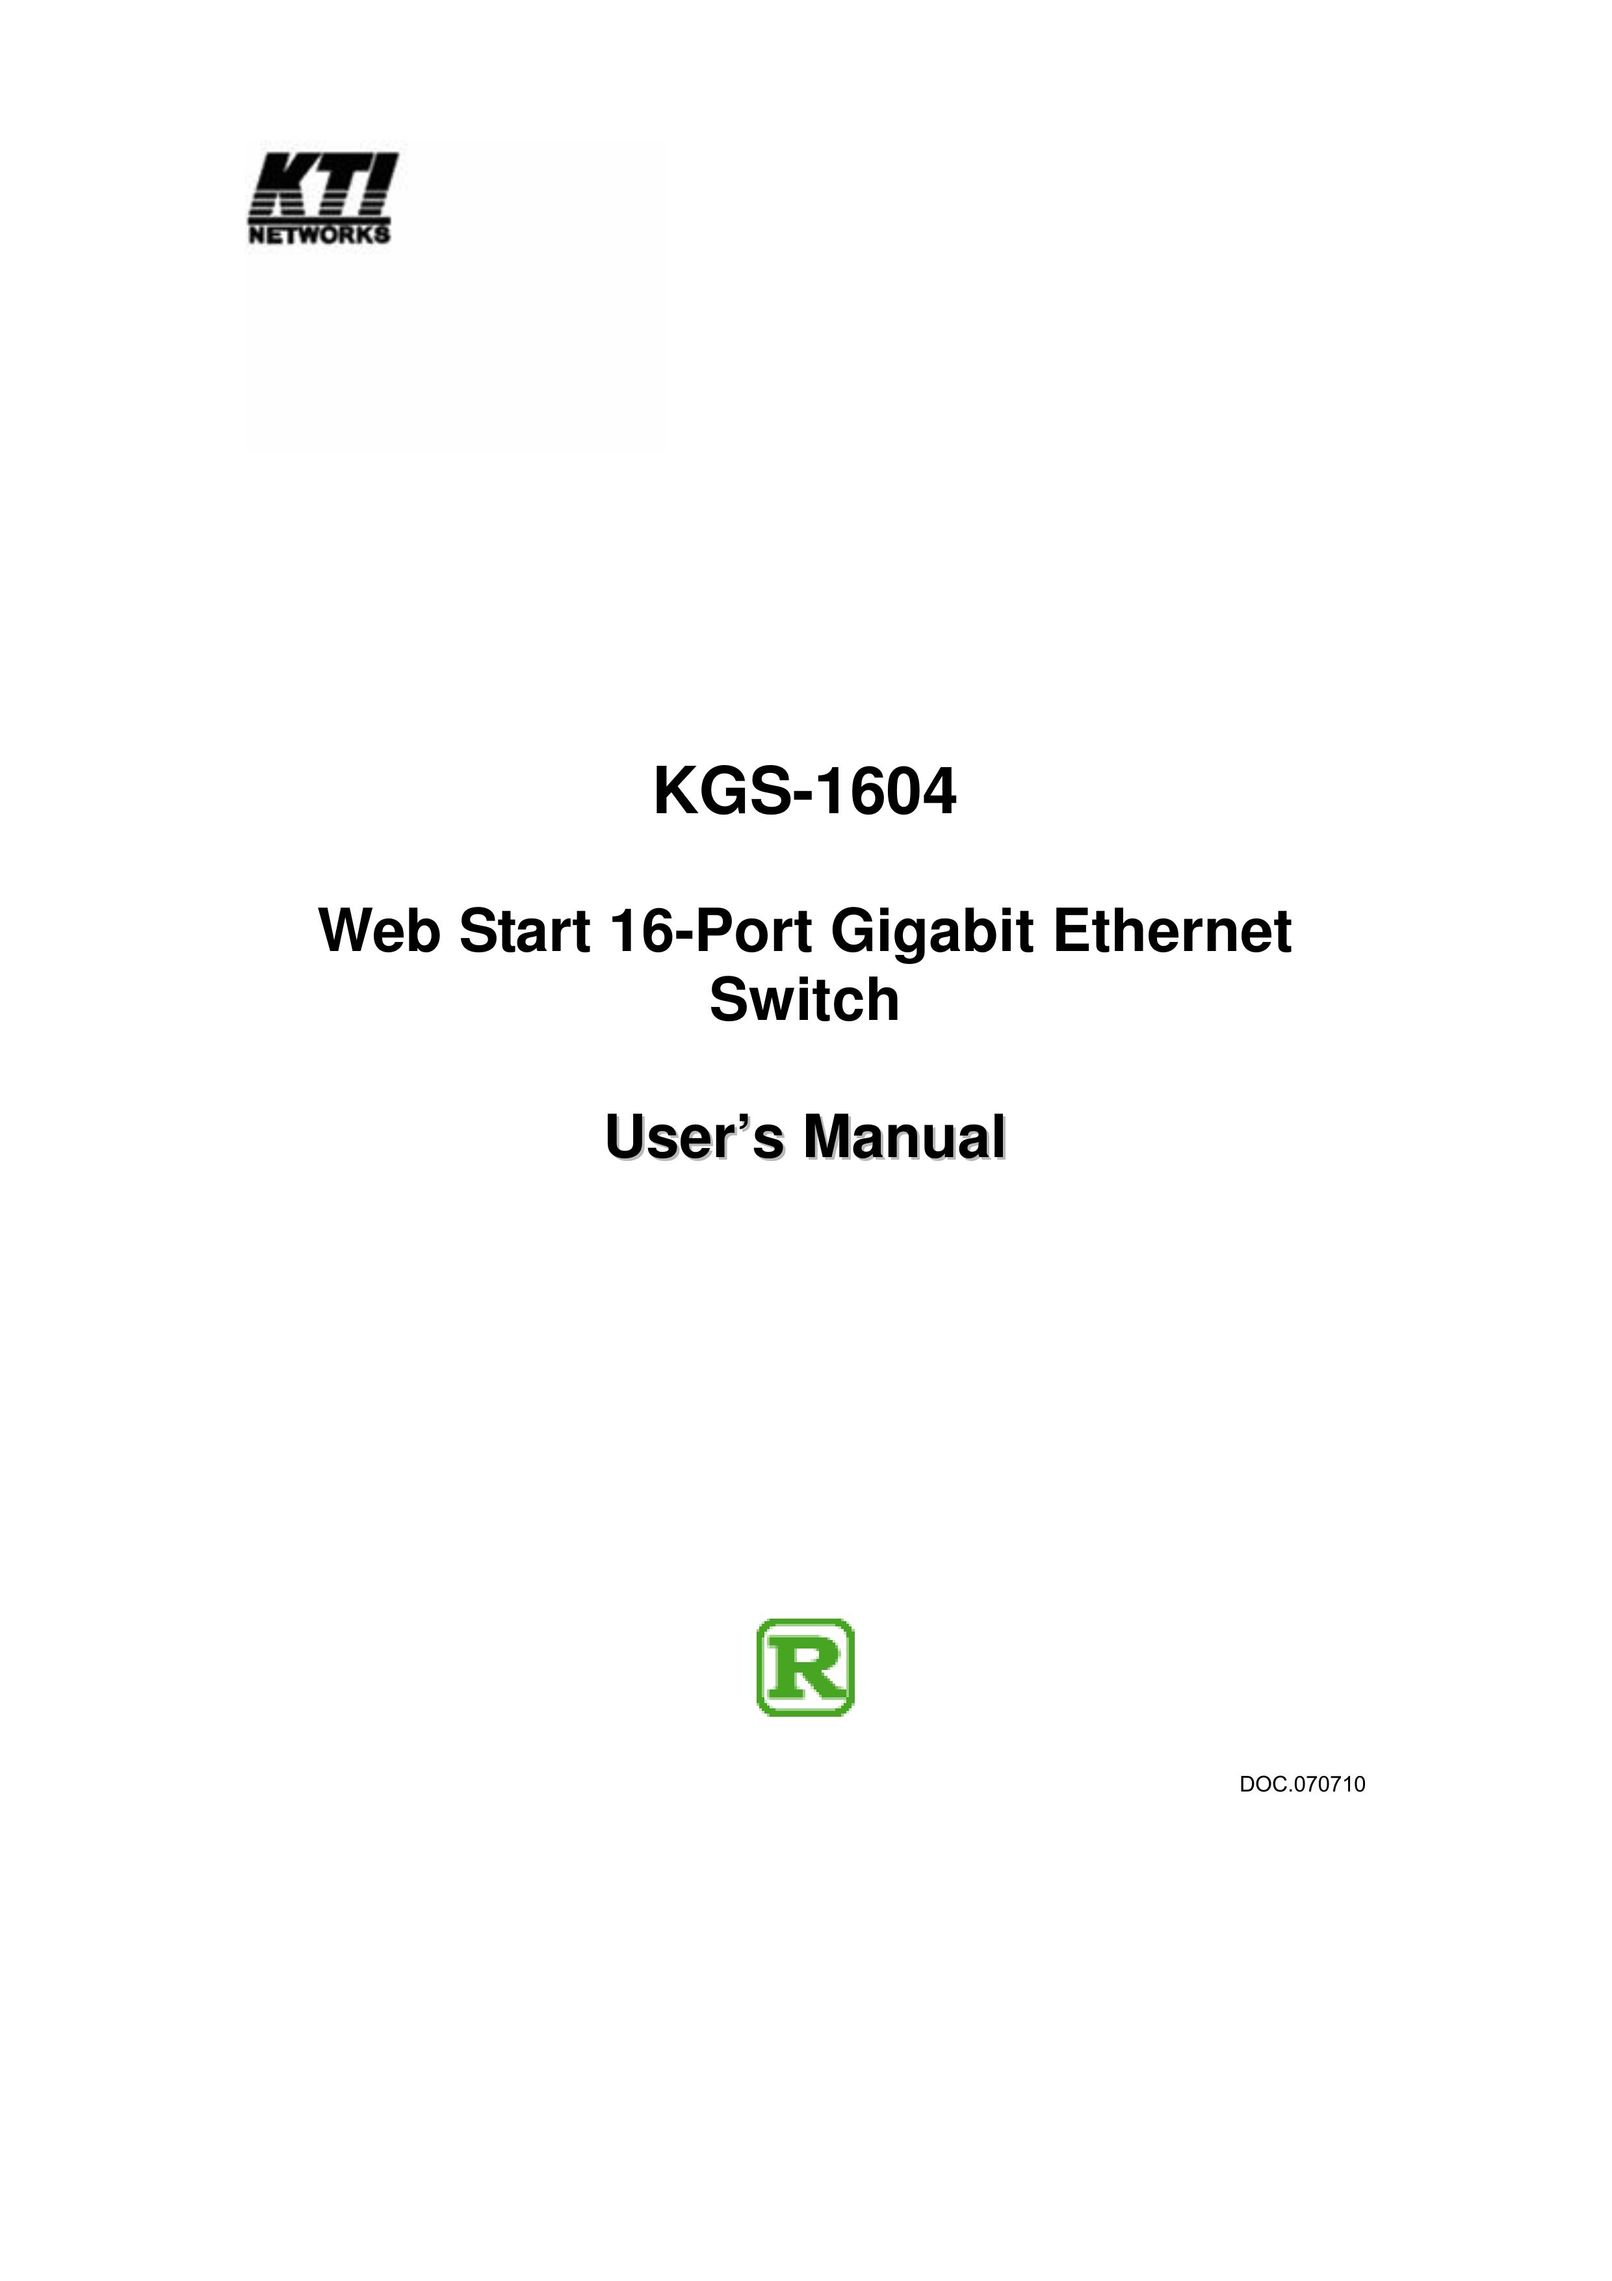 KTI Networks KGS-1604 Switch User Manual